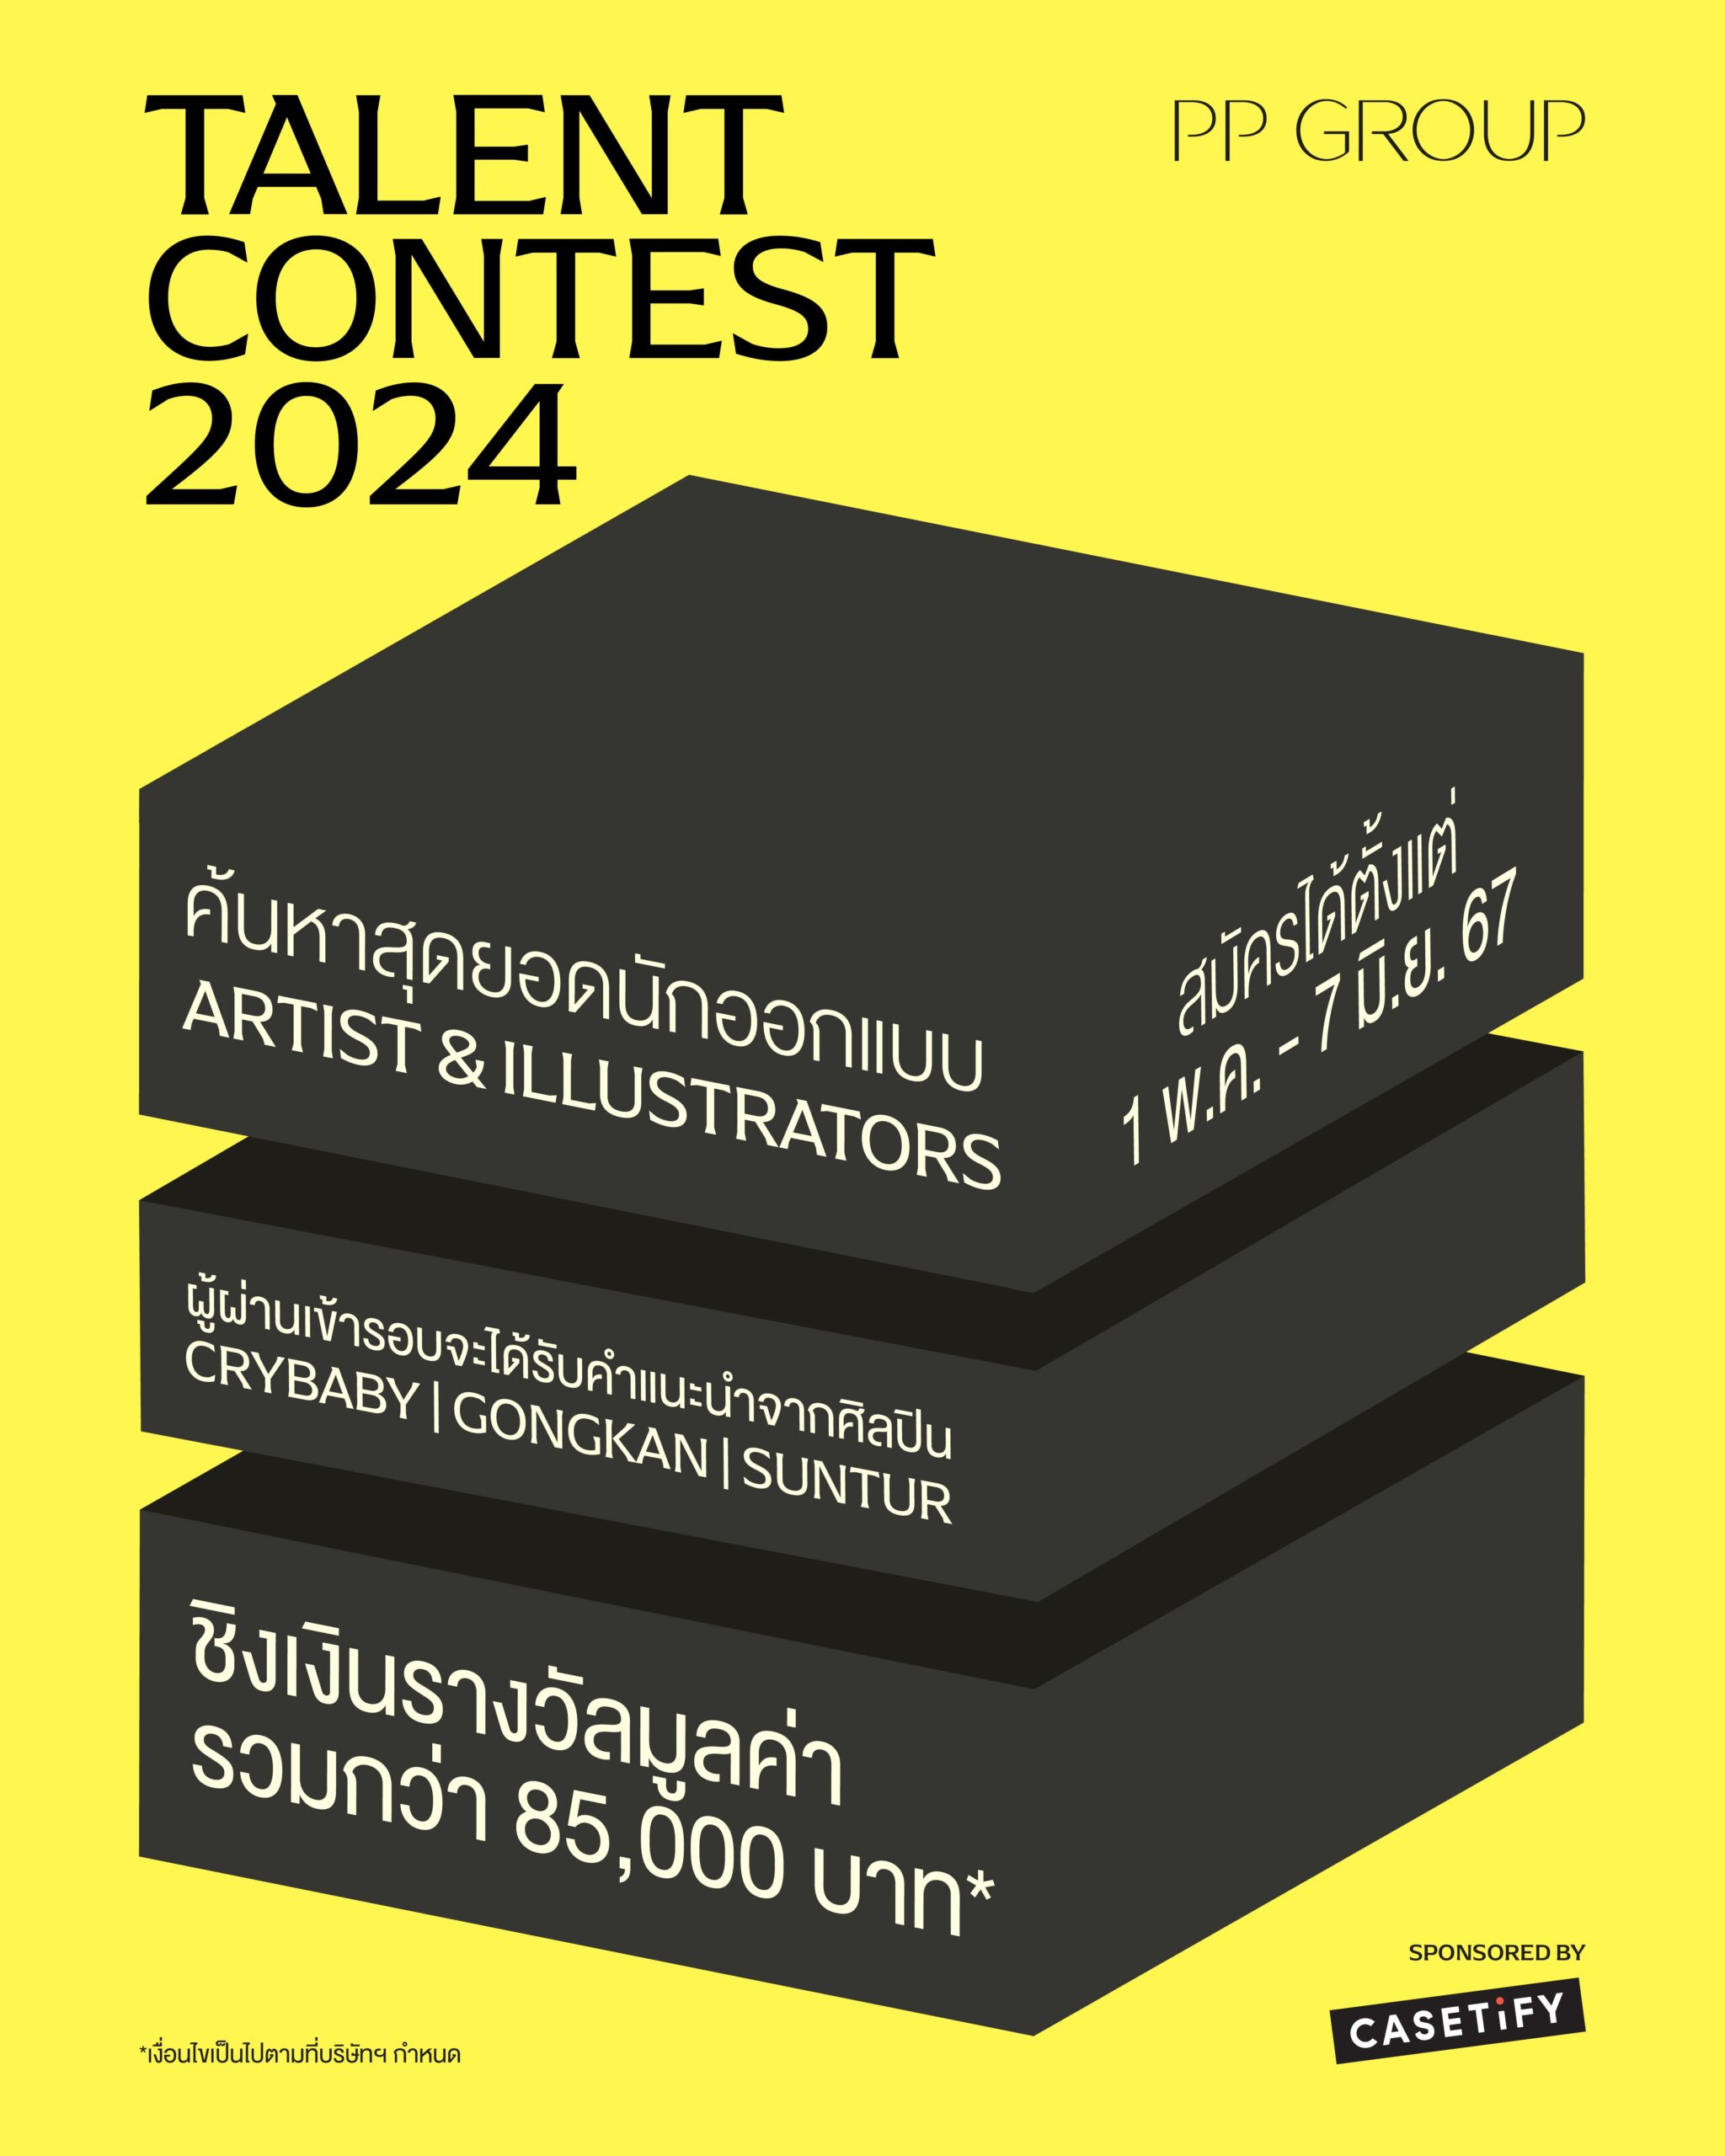 Talent Contest 2024  ค้นหาสุดยอดศิลปินและนักวาดภาพประกอบรุ่นใหม่  ร่วมงานCASETiFY แบรนด์ดังระดับโลก